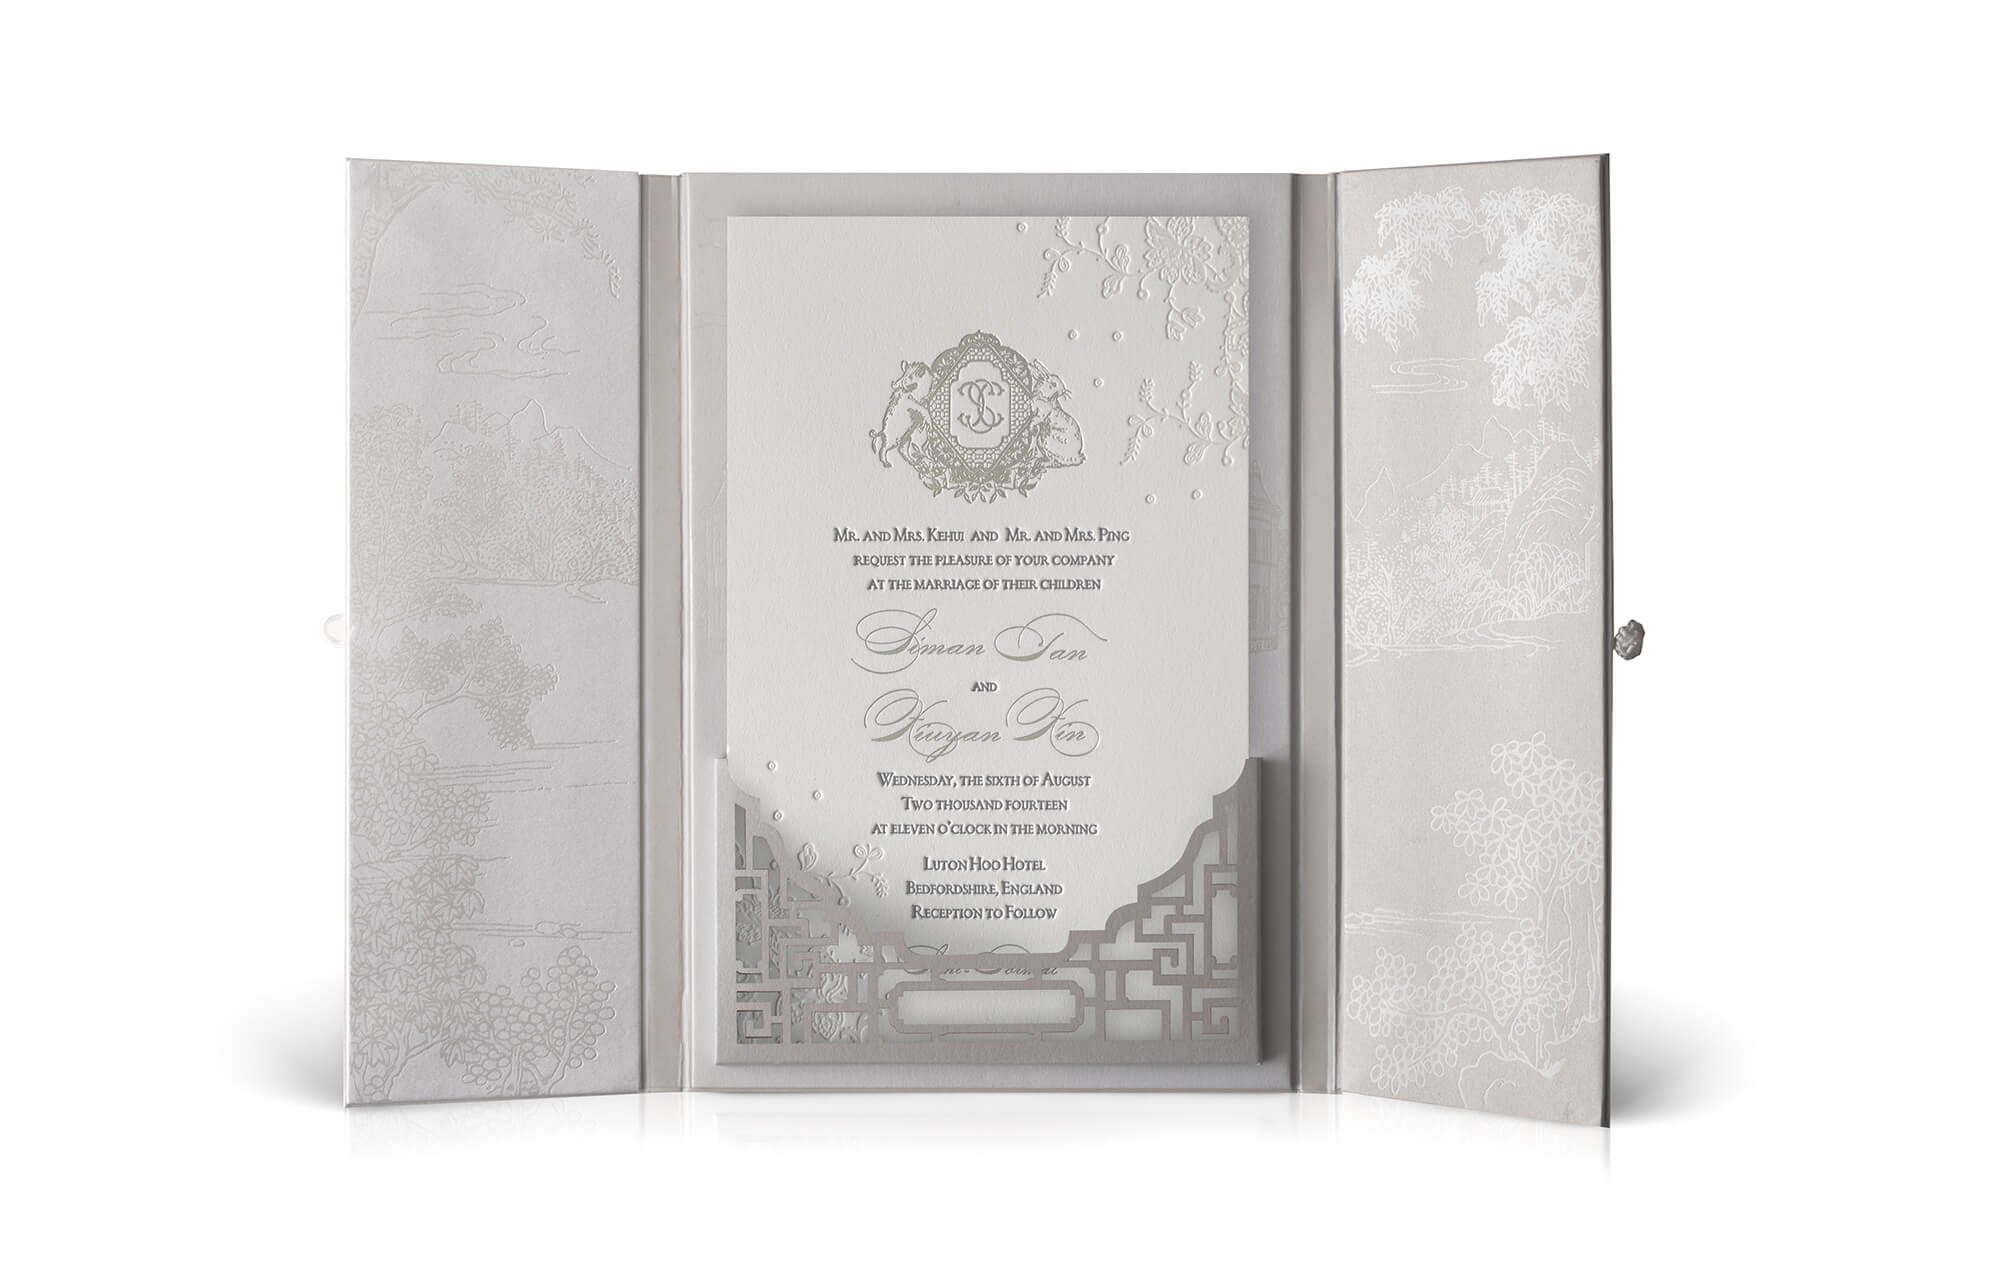 Modern Chinese wedding invitations